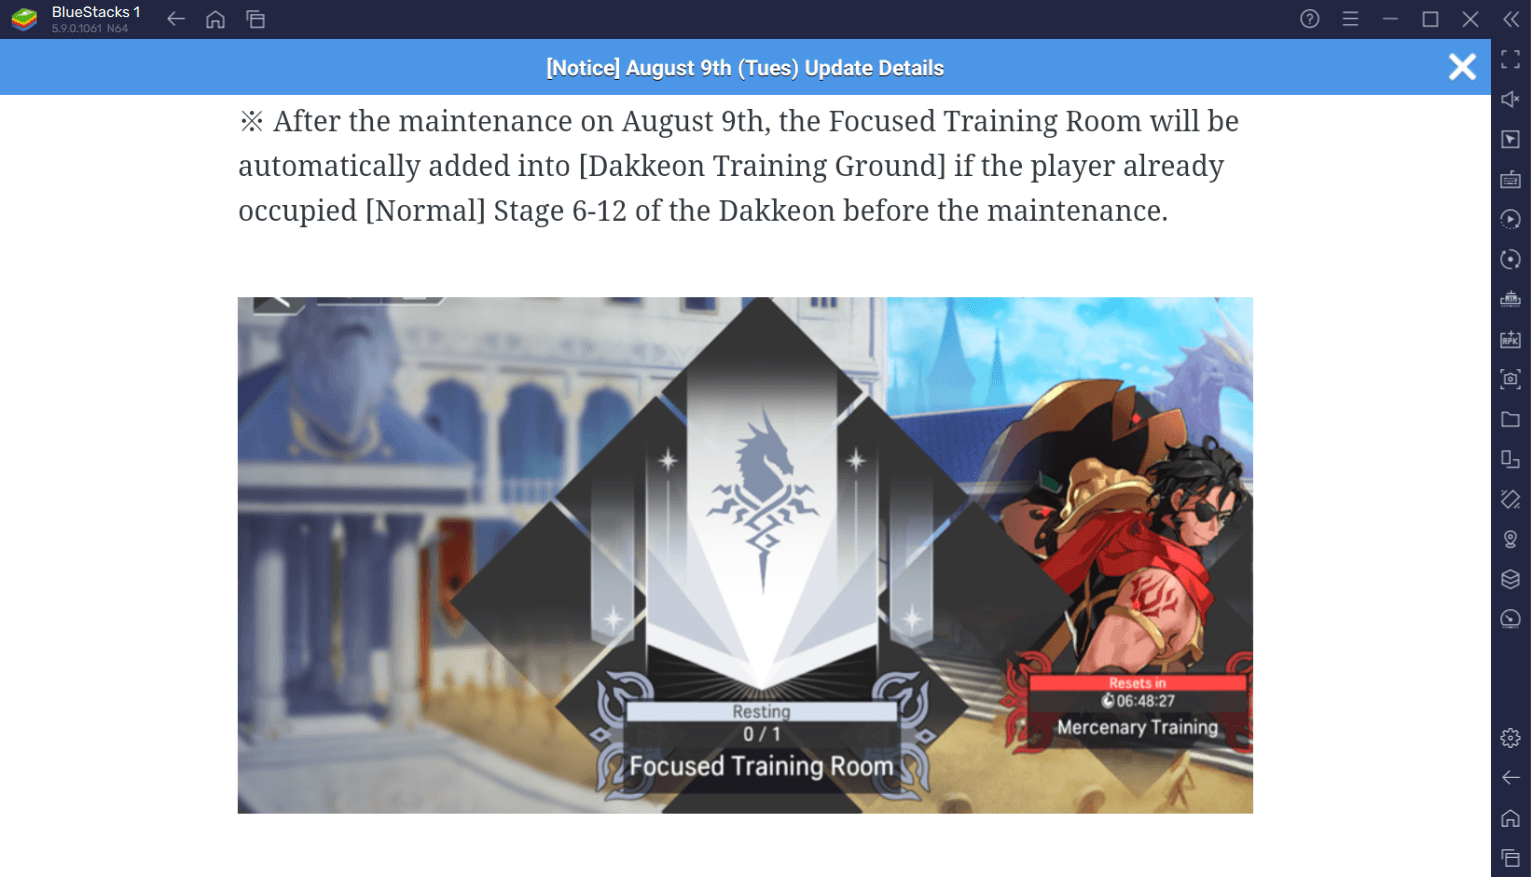 Lord of Heroes – Focused Training Room, Alchemist Shop Changes and Mystic Beast Hunt Mayhem